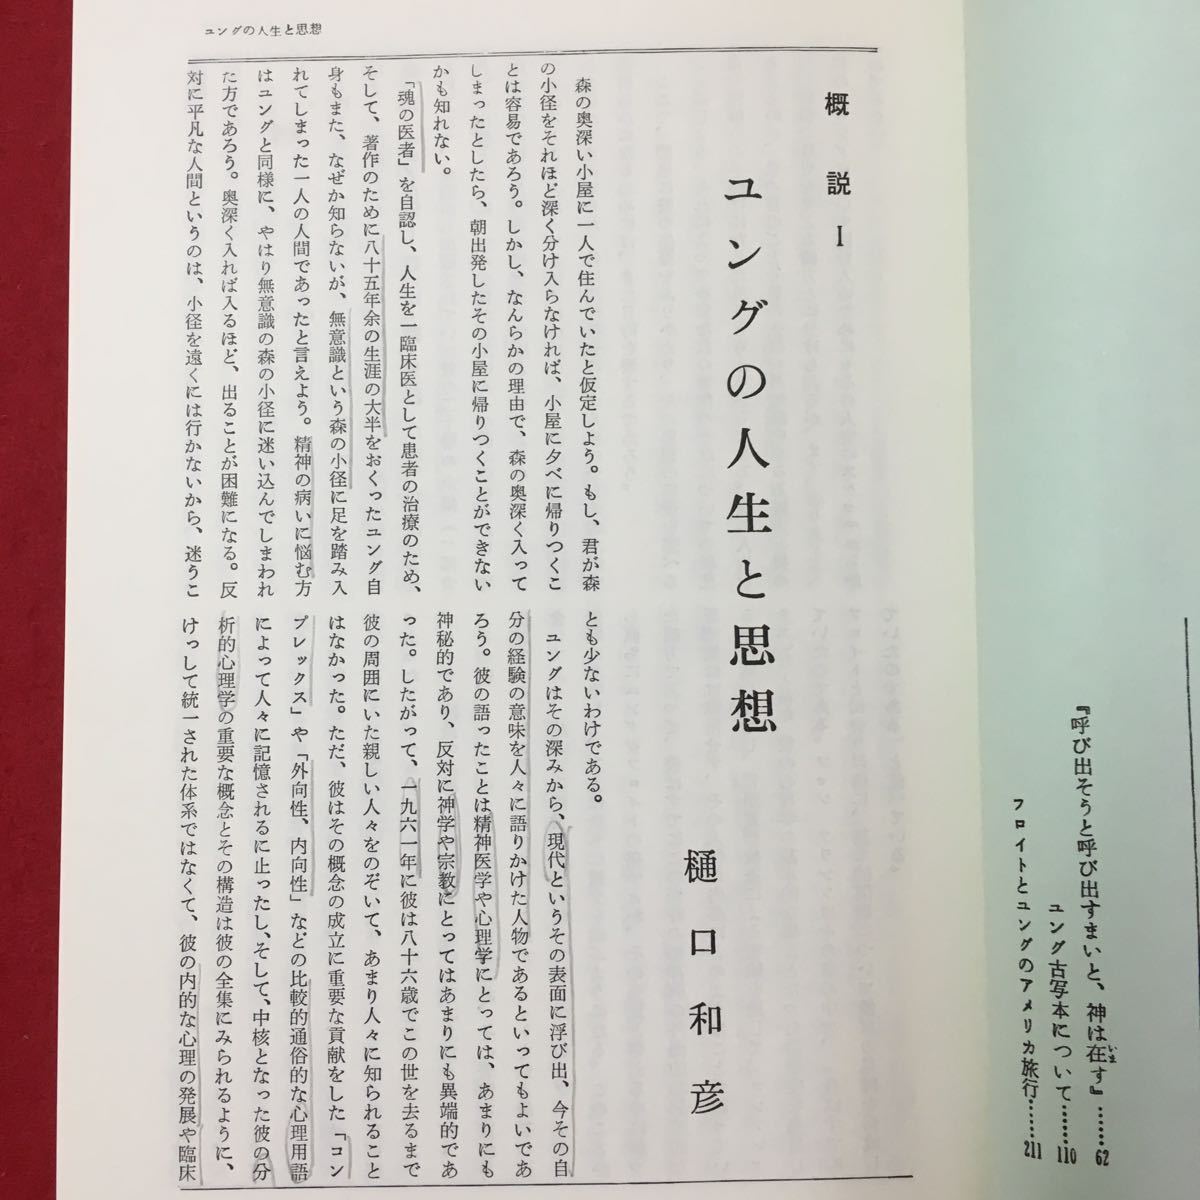 S7g-041 現代のエスプリ ユング心理学 昭和53年9月1日発行 No.134 目次/概説1 ユングの人生と思想 概説2 夢の世界 ユングの夢を中心に_数ページに書き込みあり。